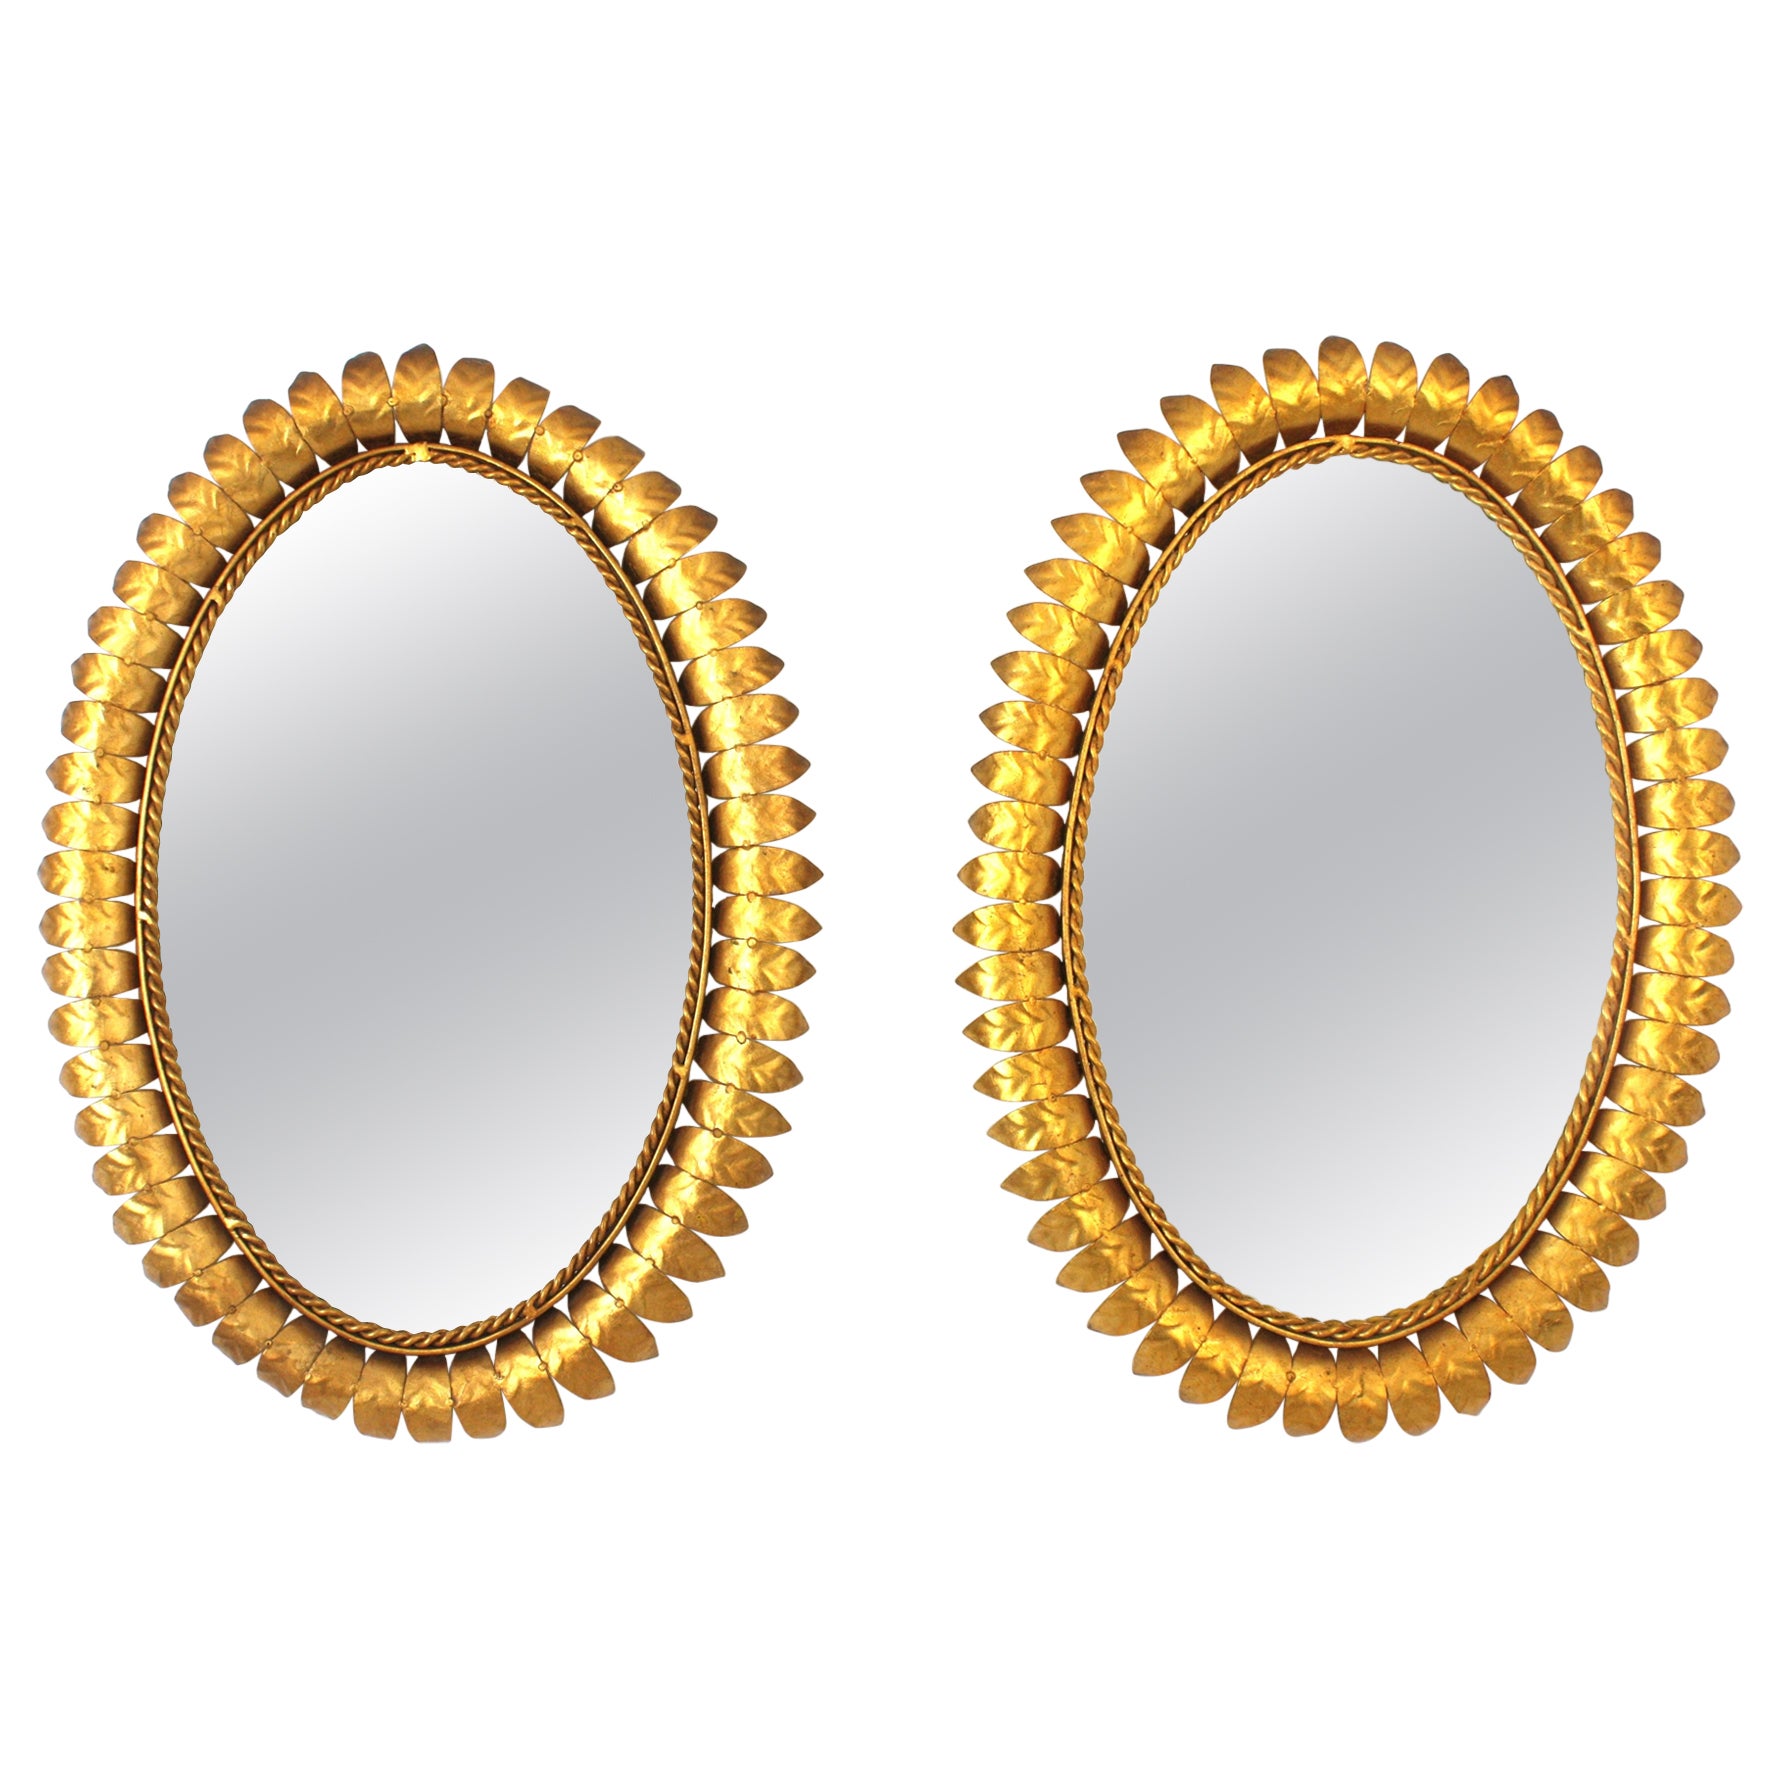 Pair of Sunburst Oval Mirrors in Gilt Metal